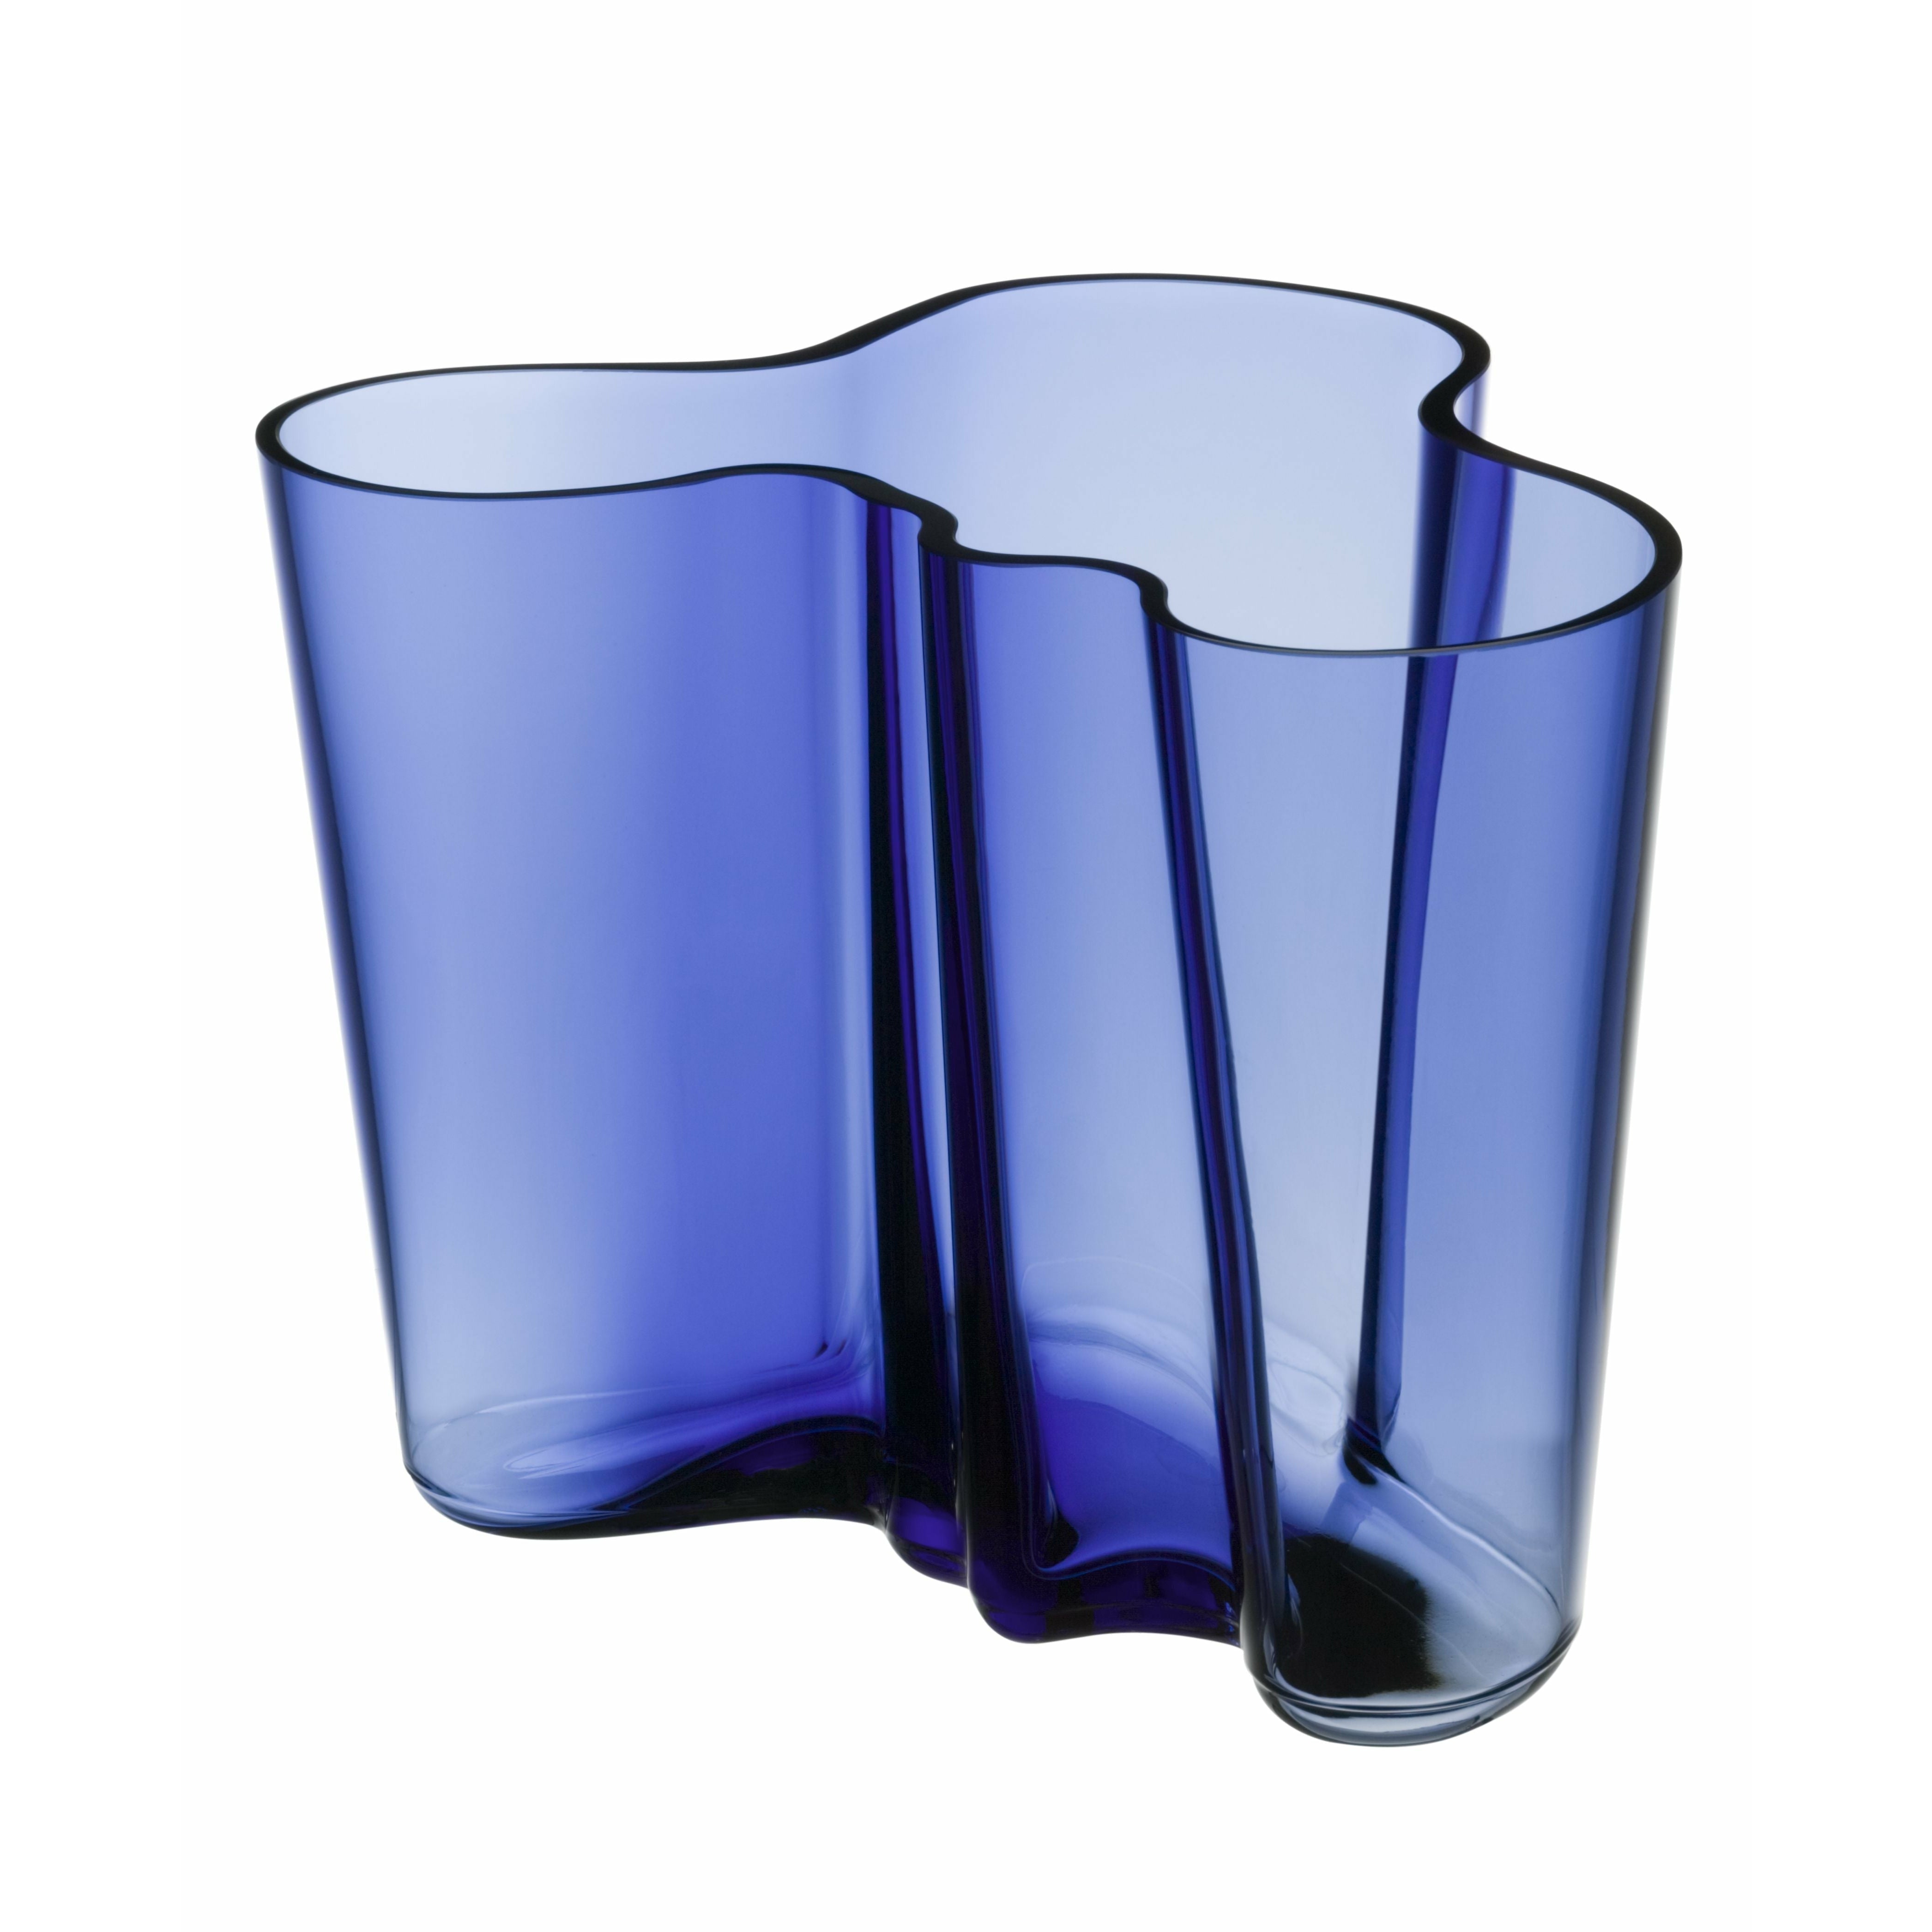 Iittala aalto wazon 16 cm, ultramarynowy niebieski